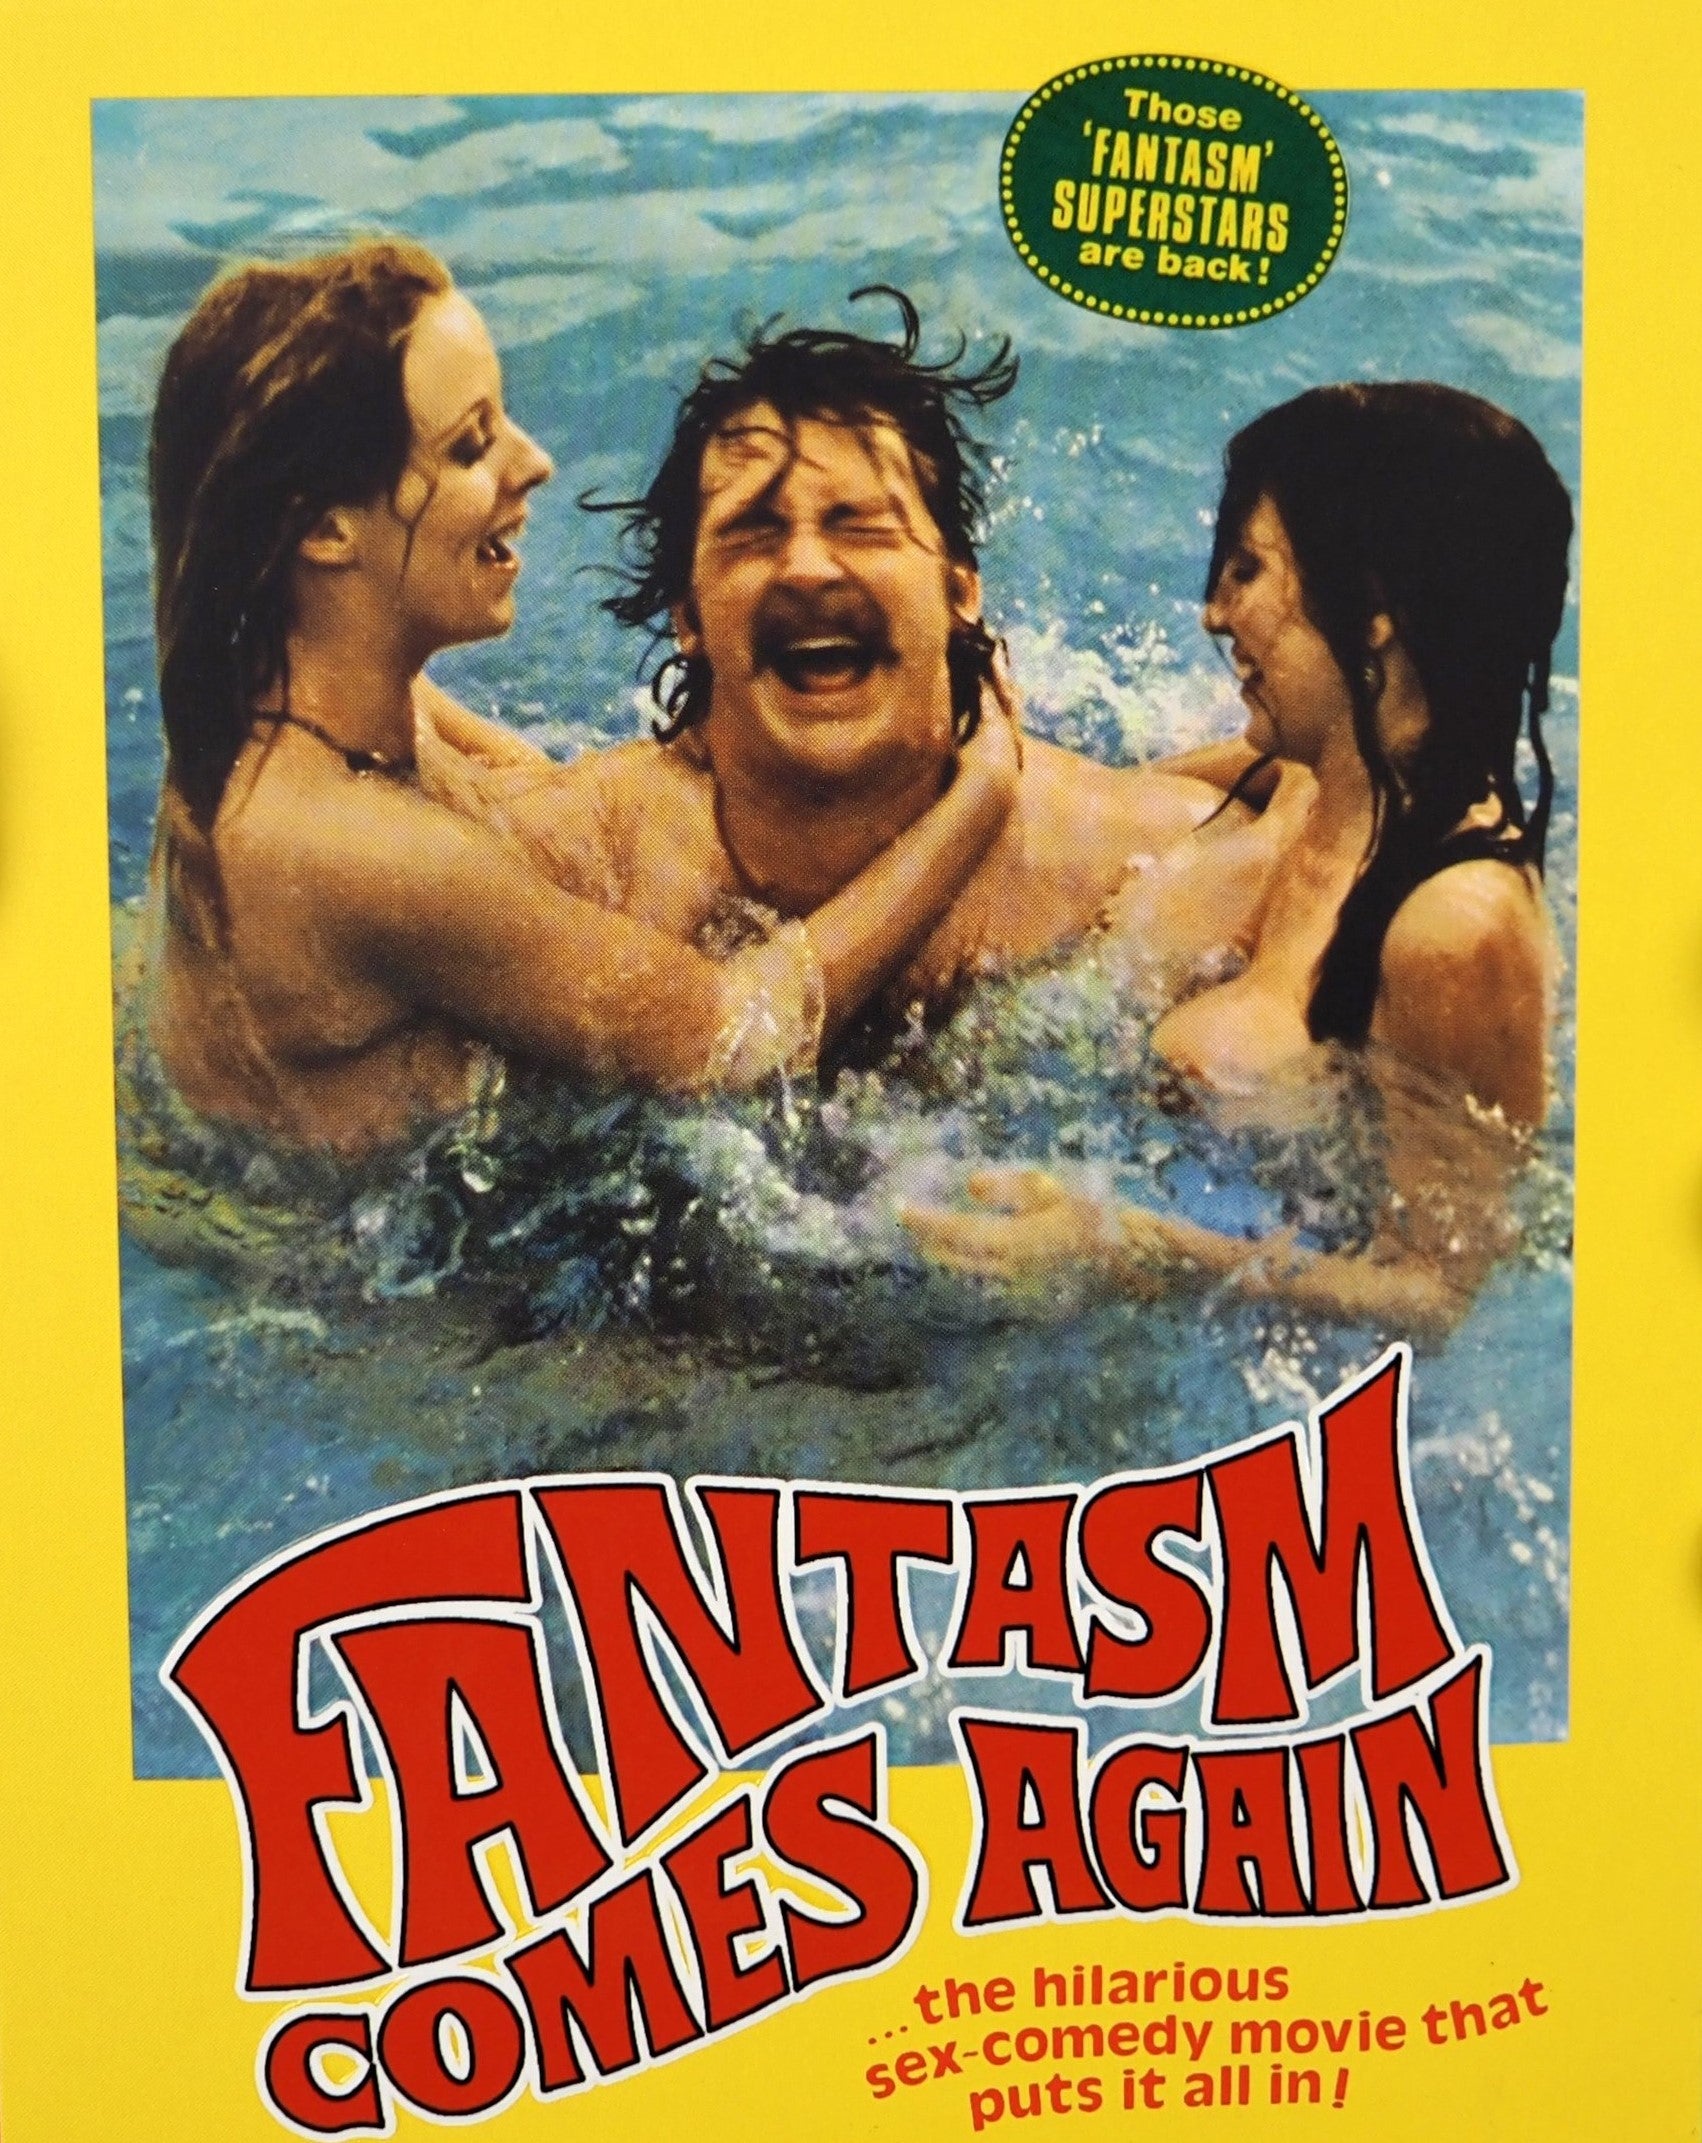 Fantasm / Comes Again (Limited Edition) Blu-Ray Blu-Ray